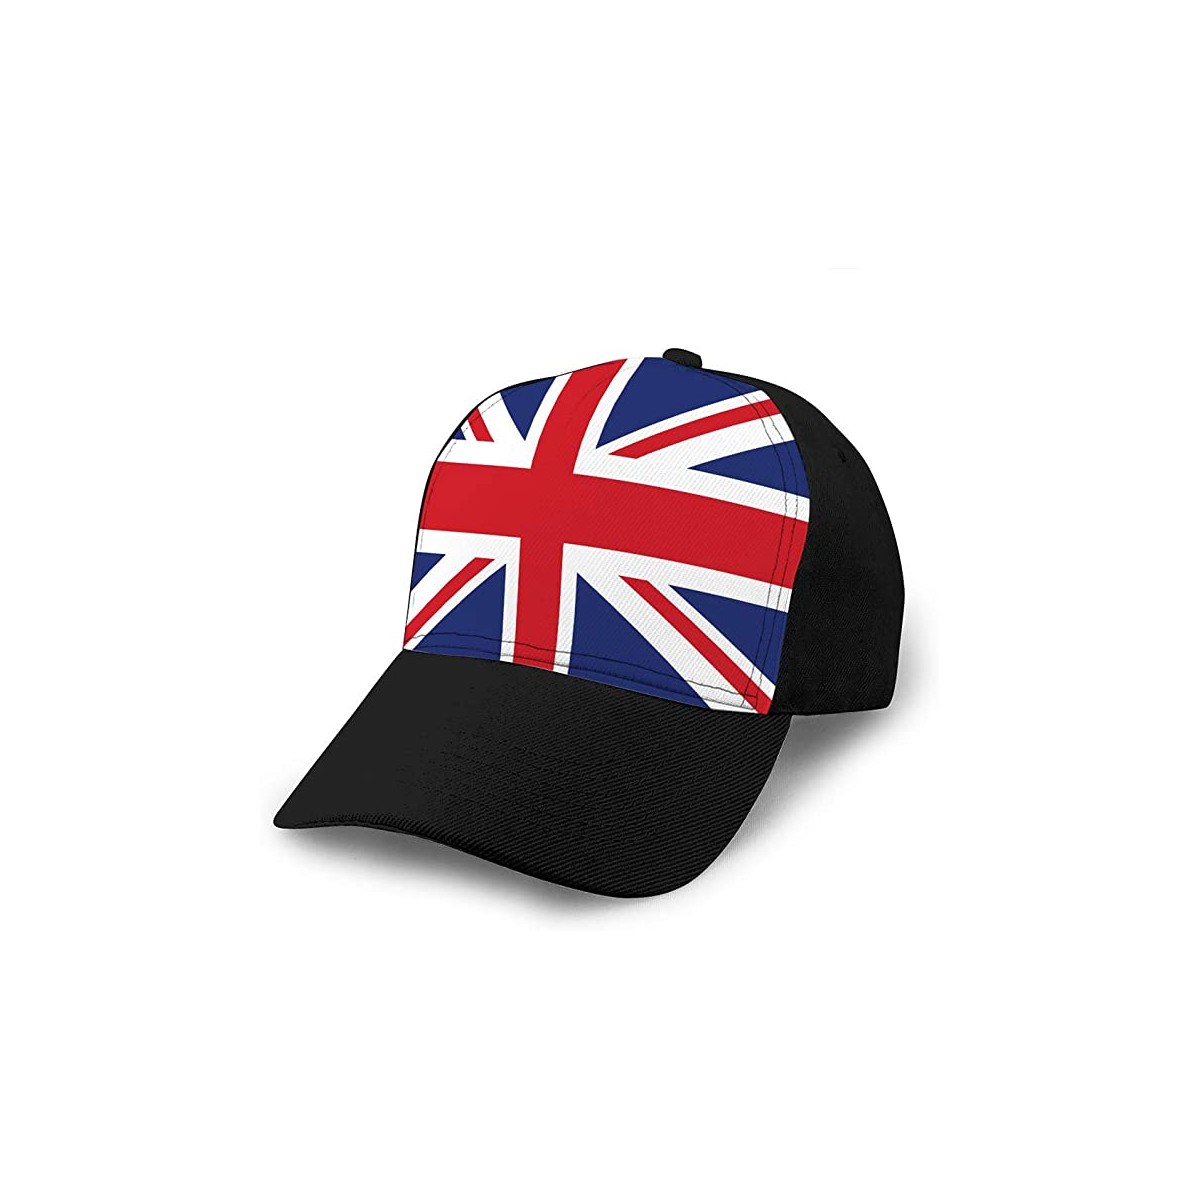 Cappellino stile UK - Gran Bretagna, cappellino con visiera